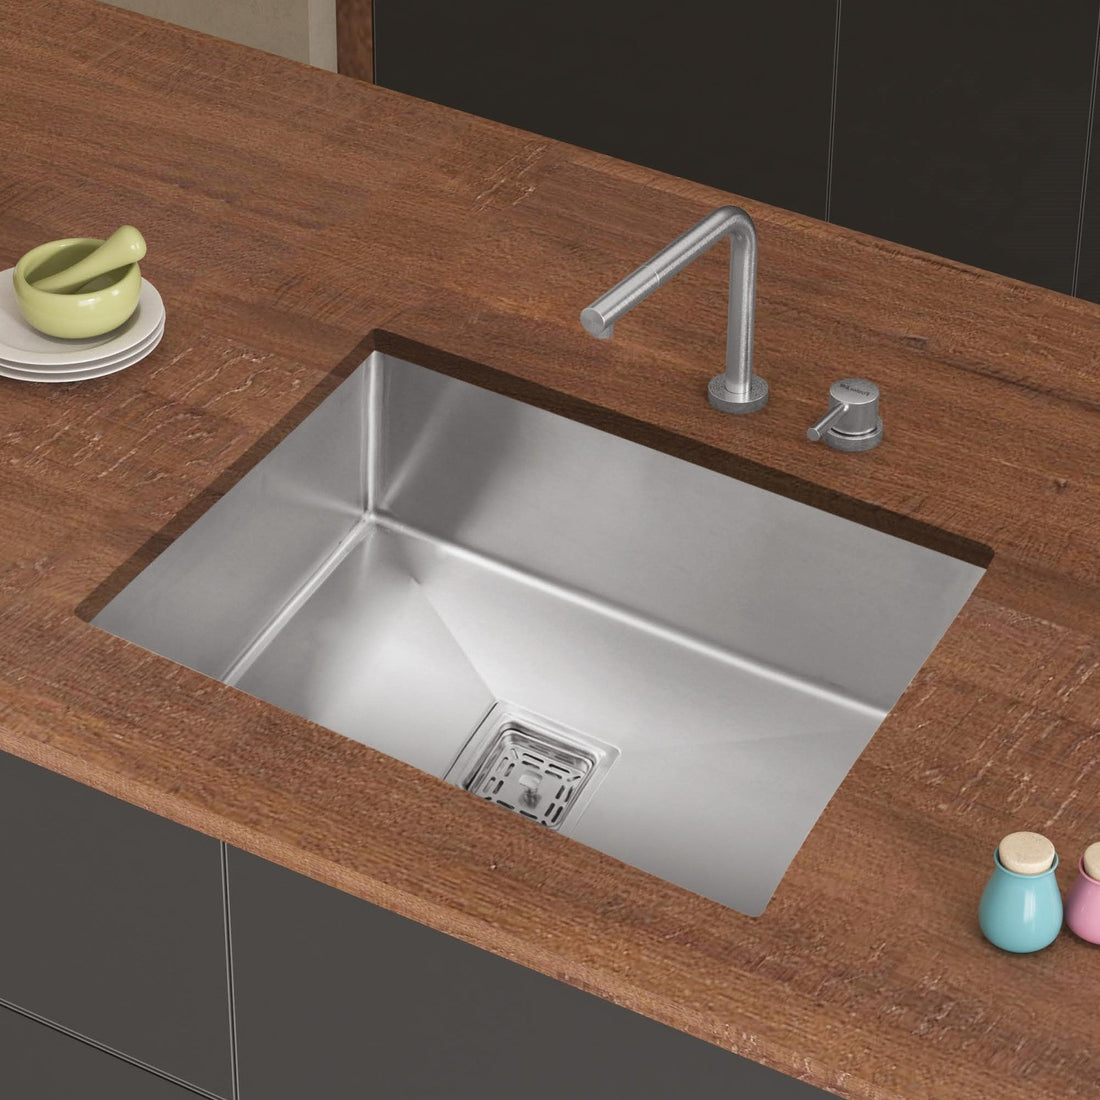 InArt 304 Grade Stainless Steel Single Bowl Handmade Kitchen Sink 21x18 - InArt-Studio